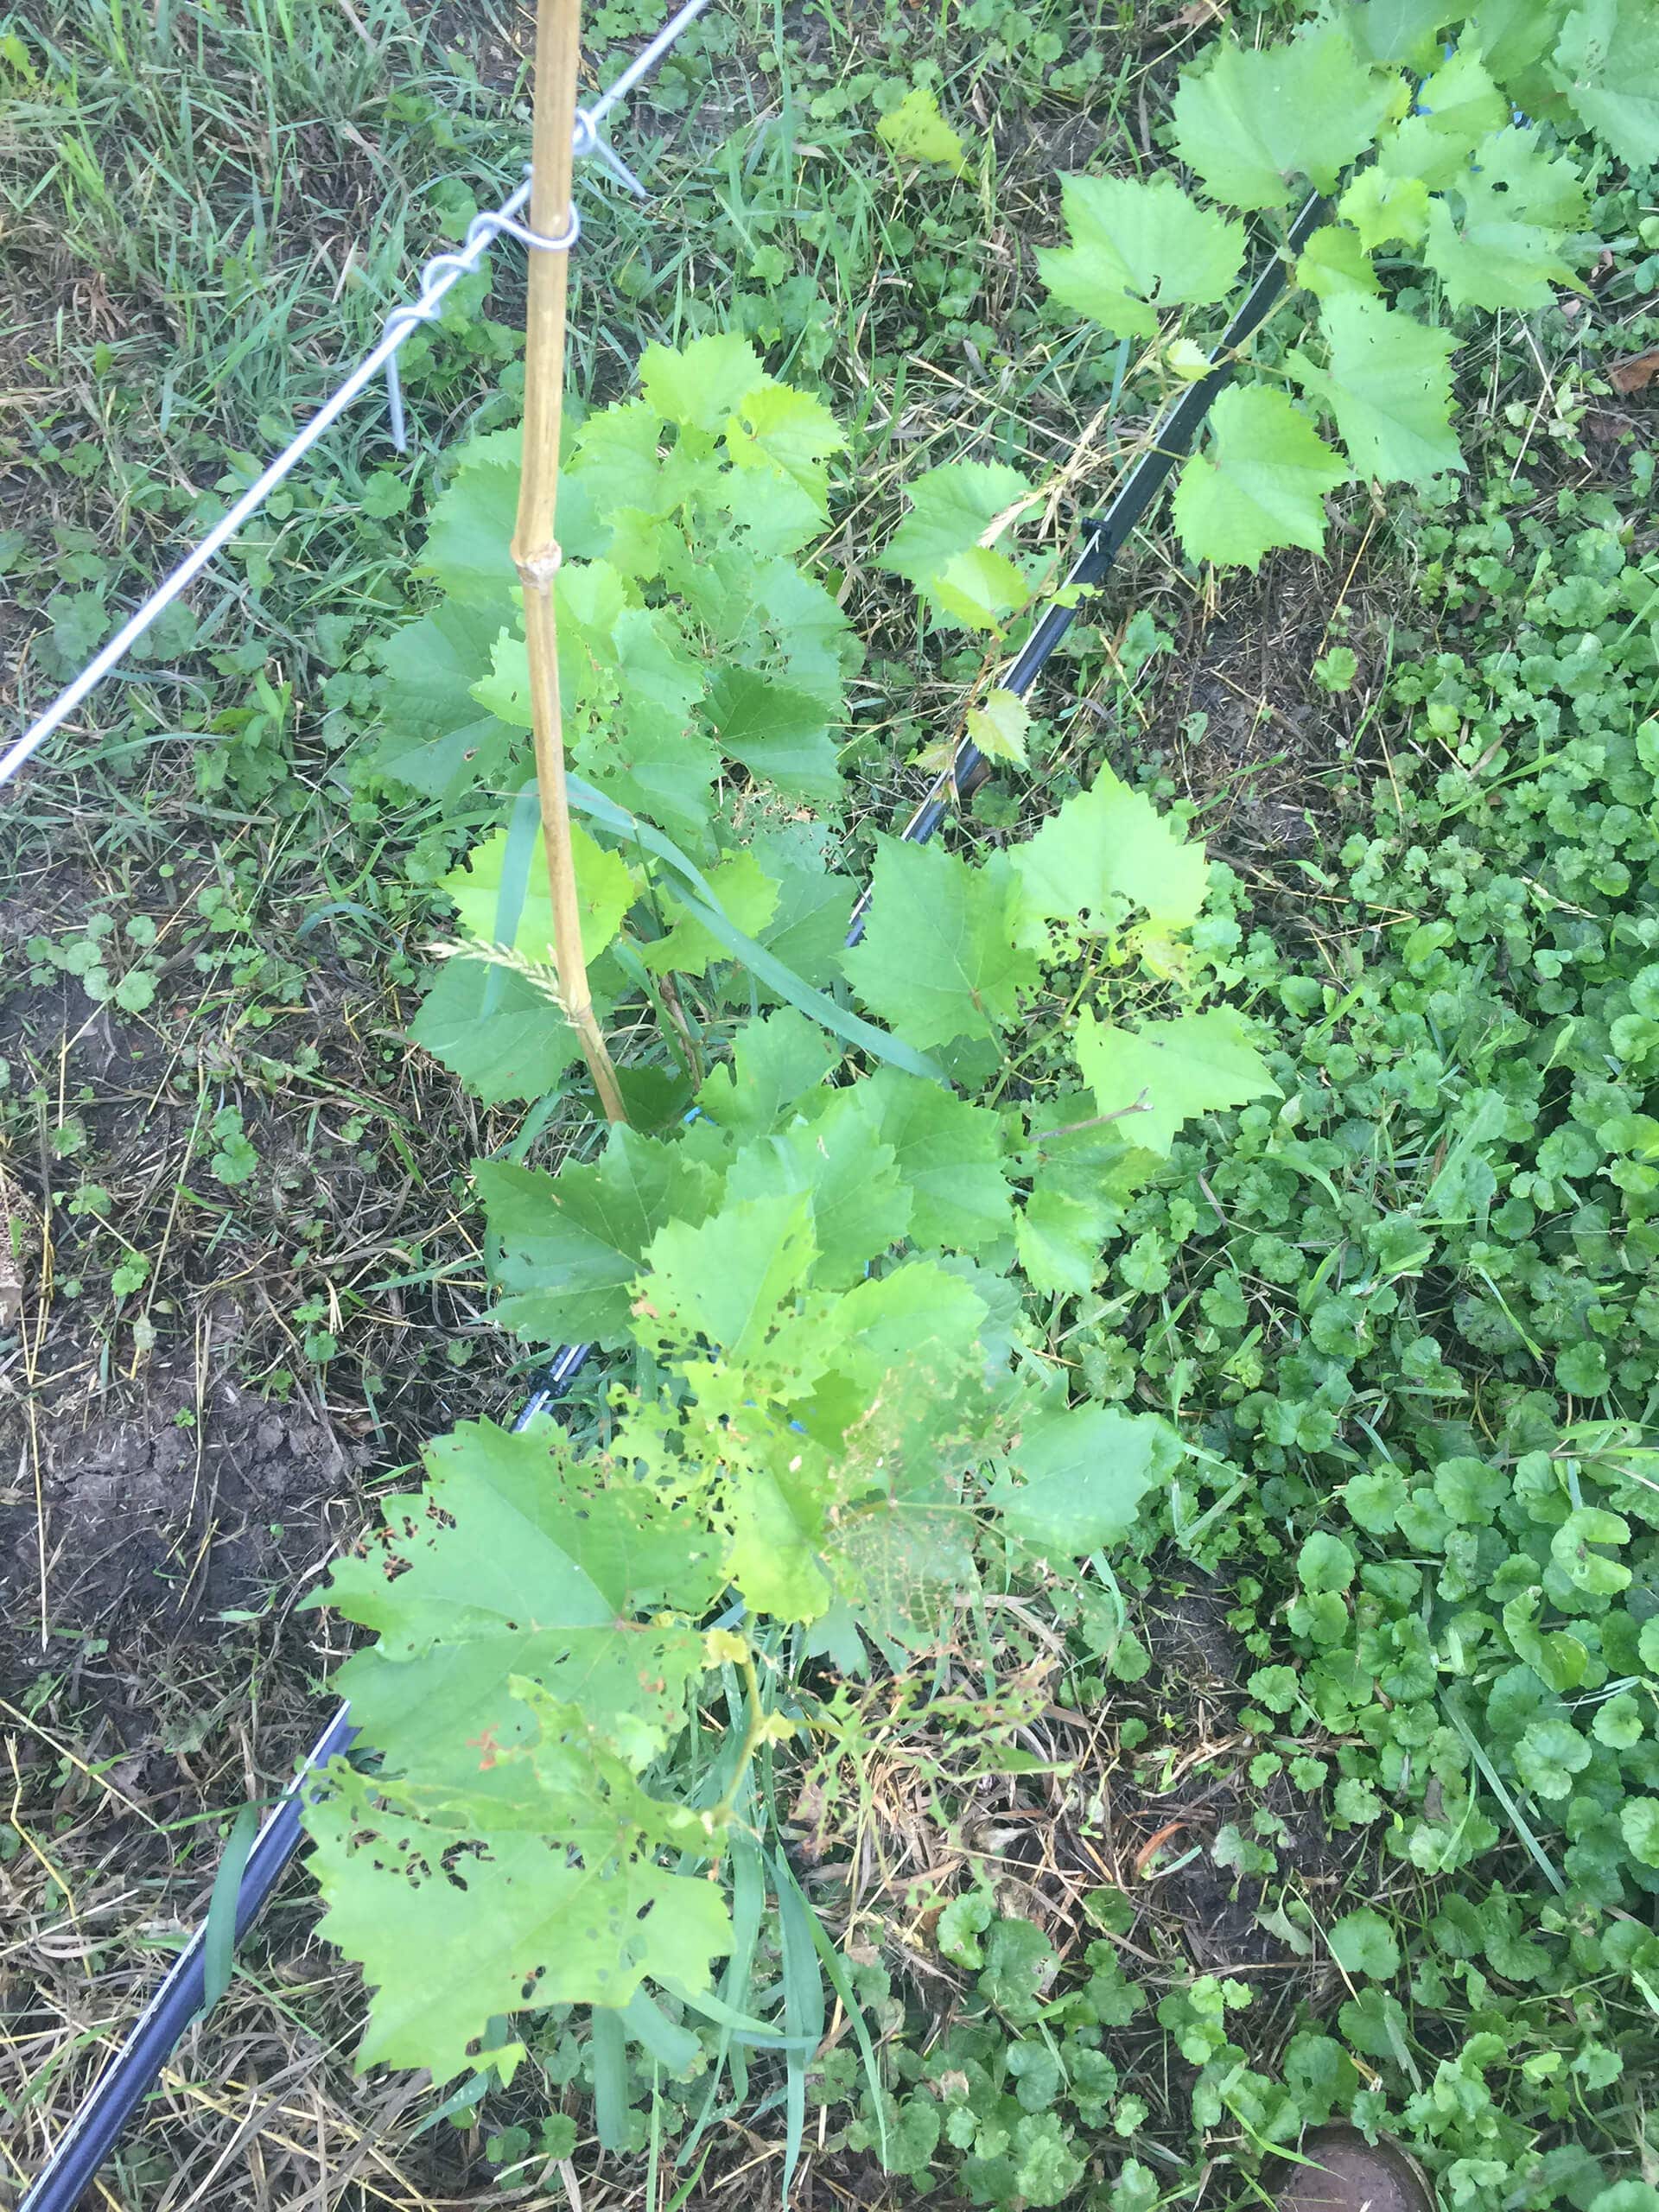 Damaged grapevines in backyard vineyard